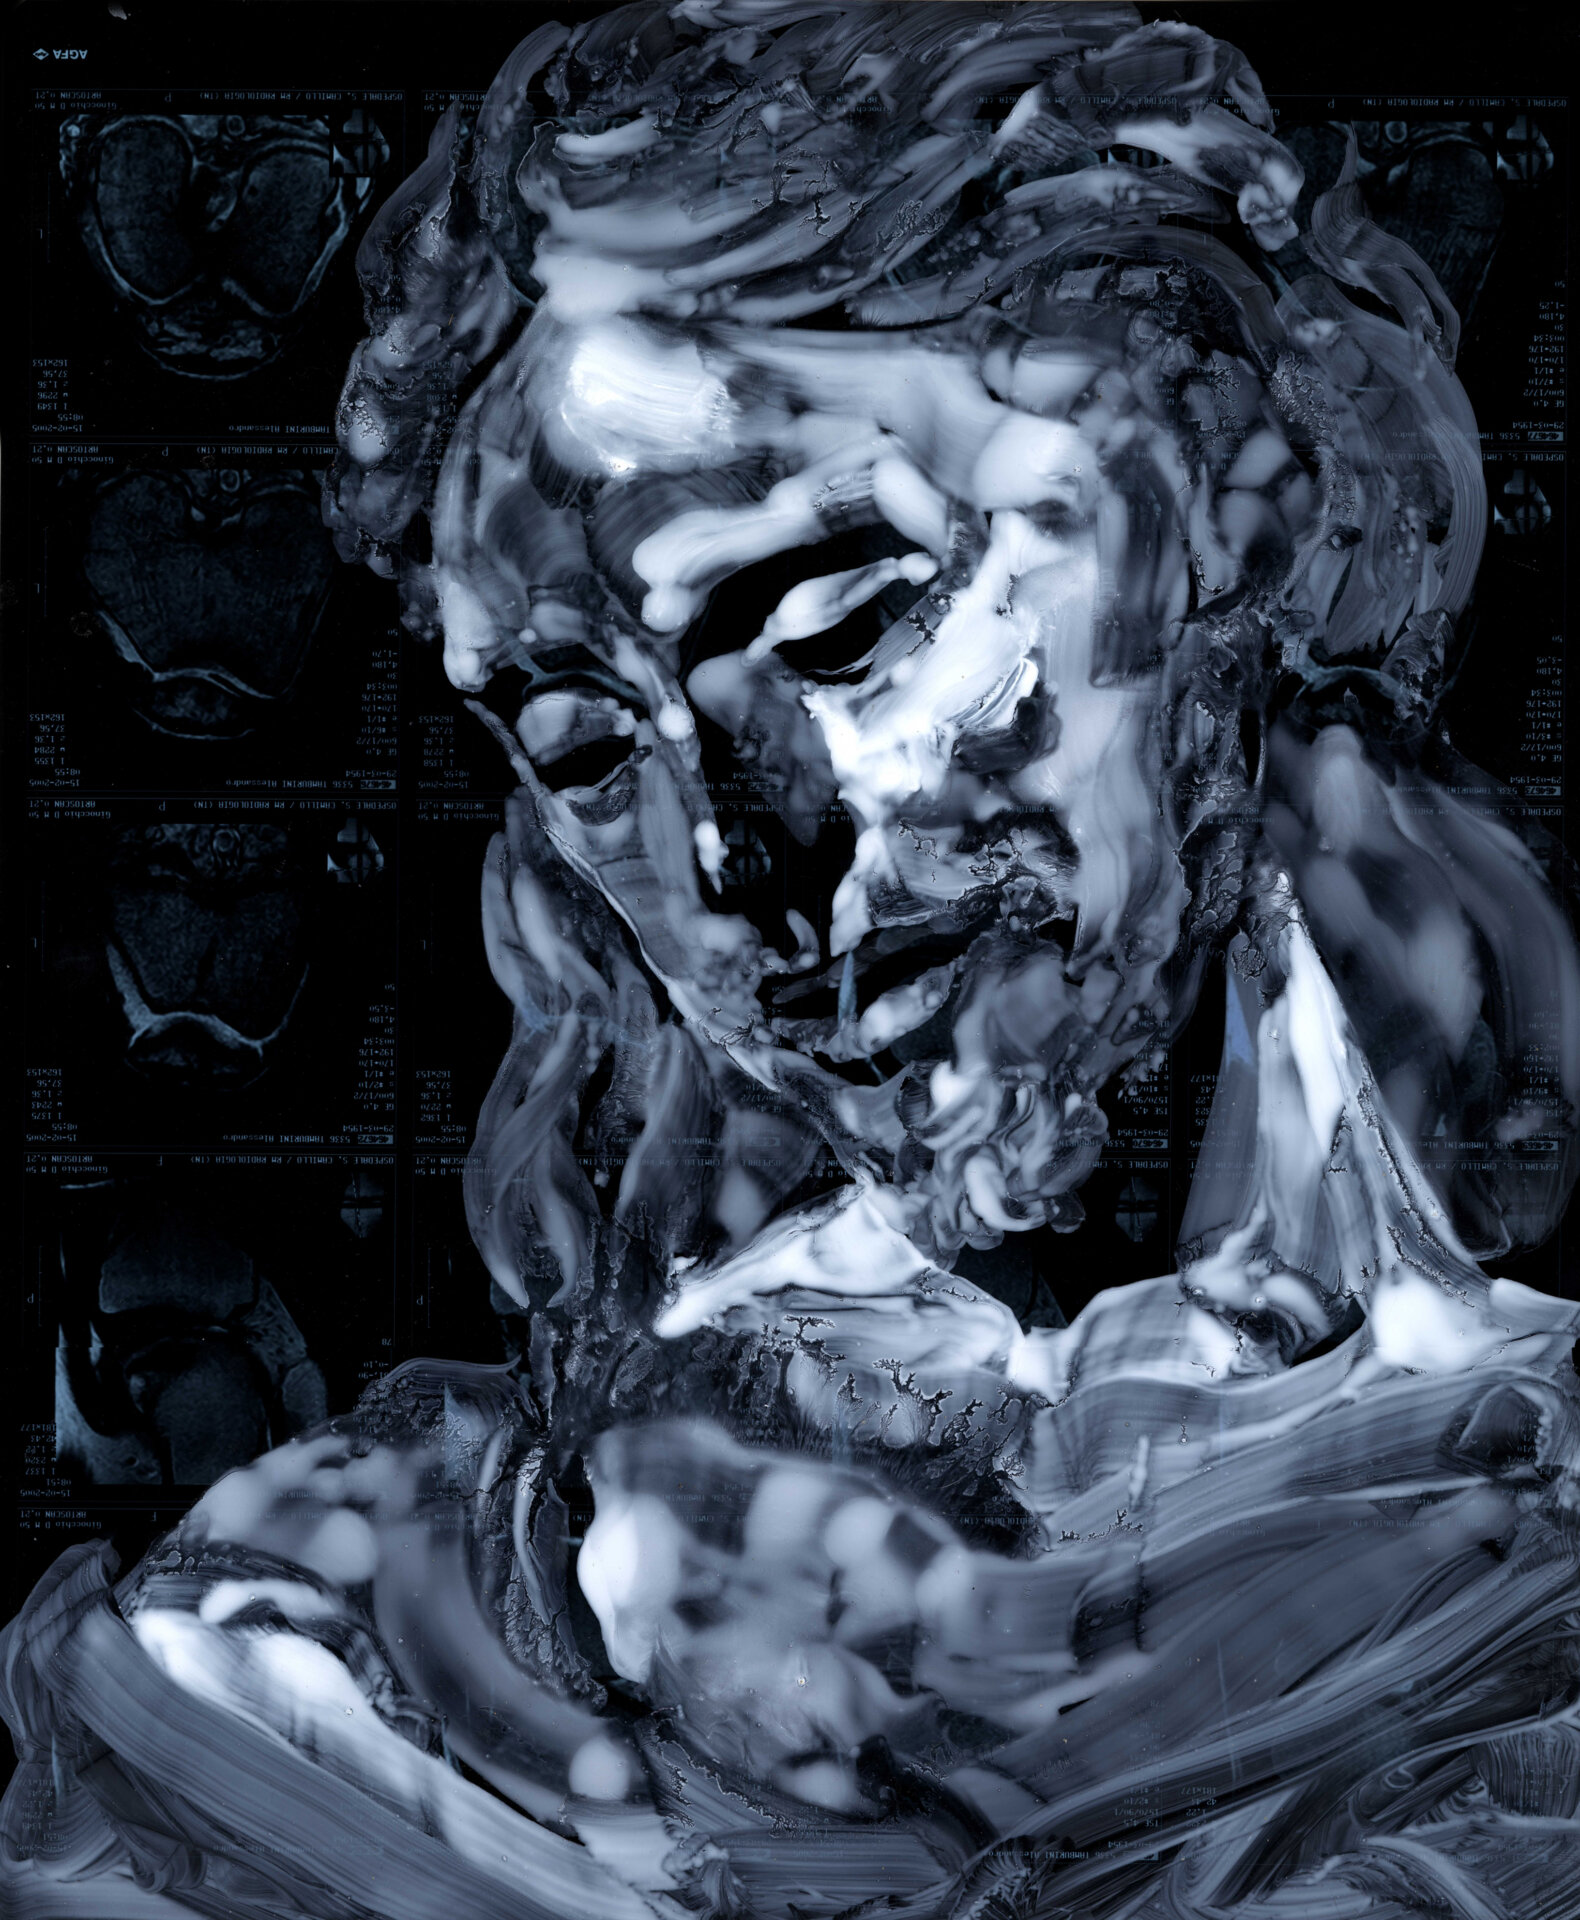 Massimo Pulini, Pneuma interno, 2020, olio su radiografia, 43 x 35 cm